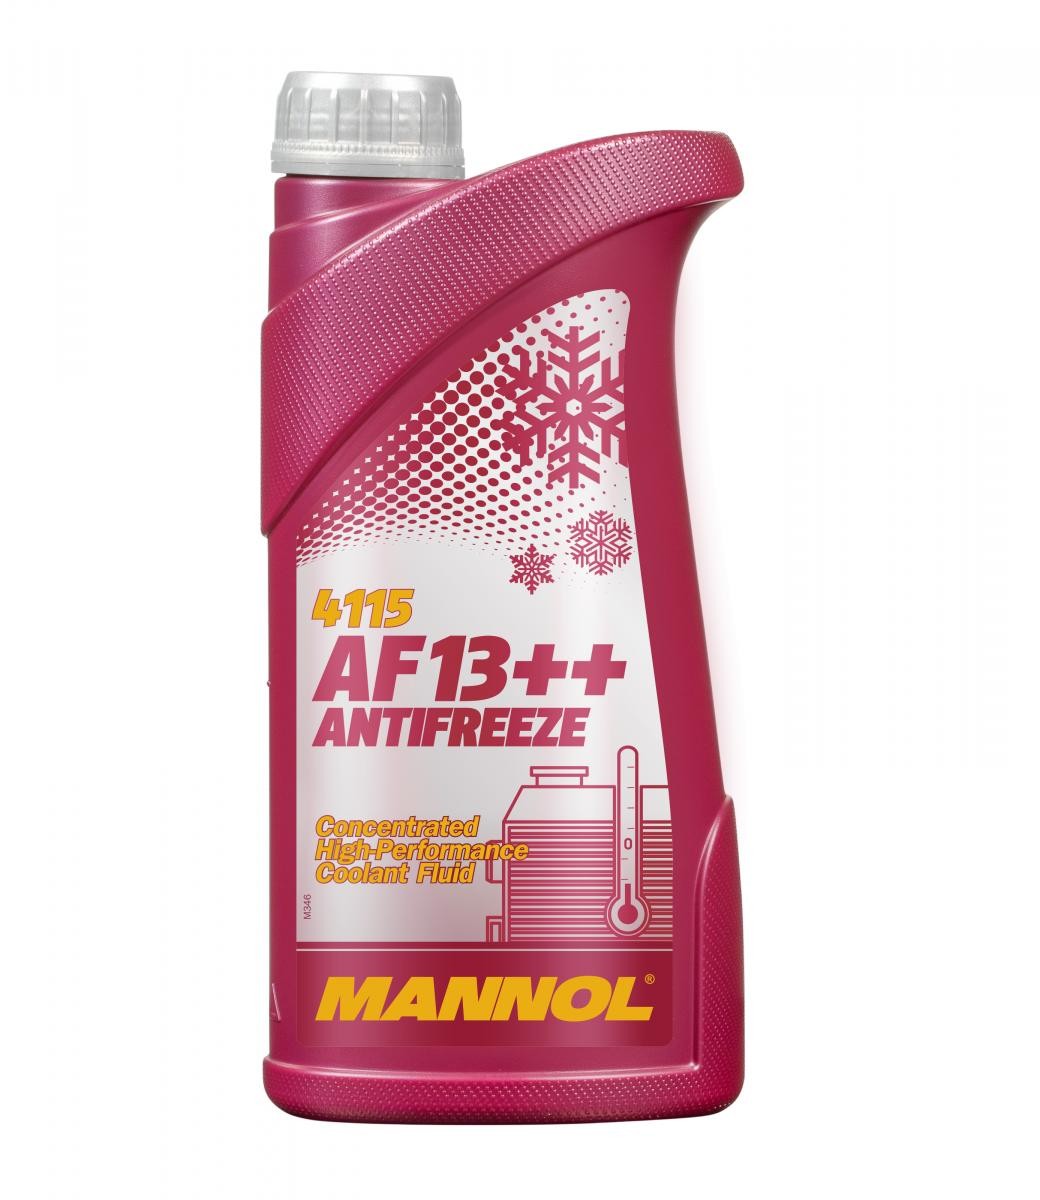 DUCATI SUPERBIKE Kühlmittel G12 Rot, 1l, -38(50/50) MANNOL AF13++, High-performance MN4115-1